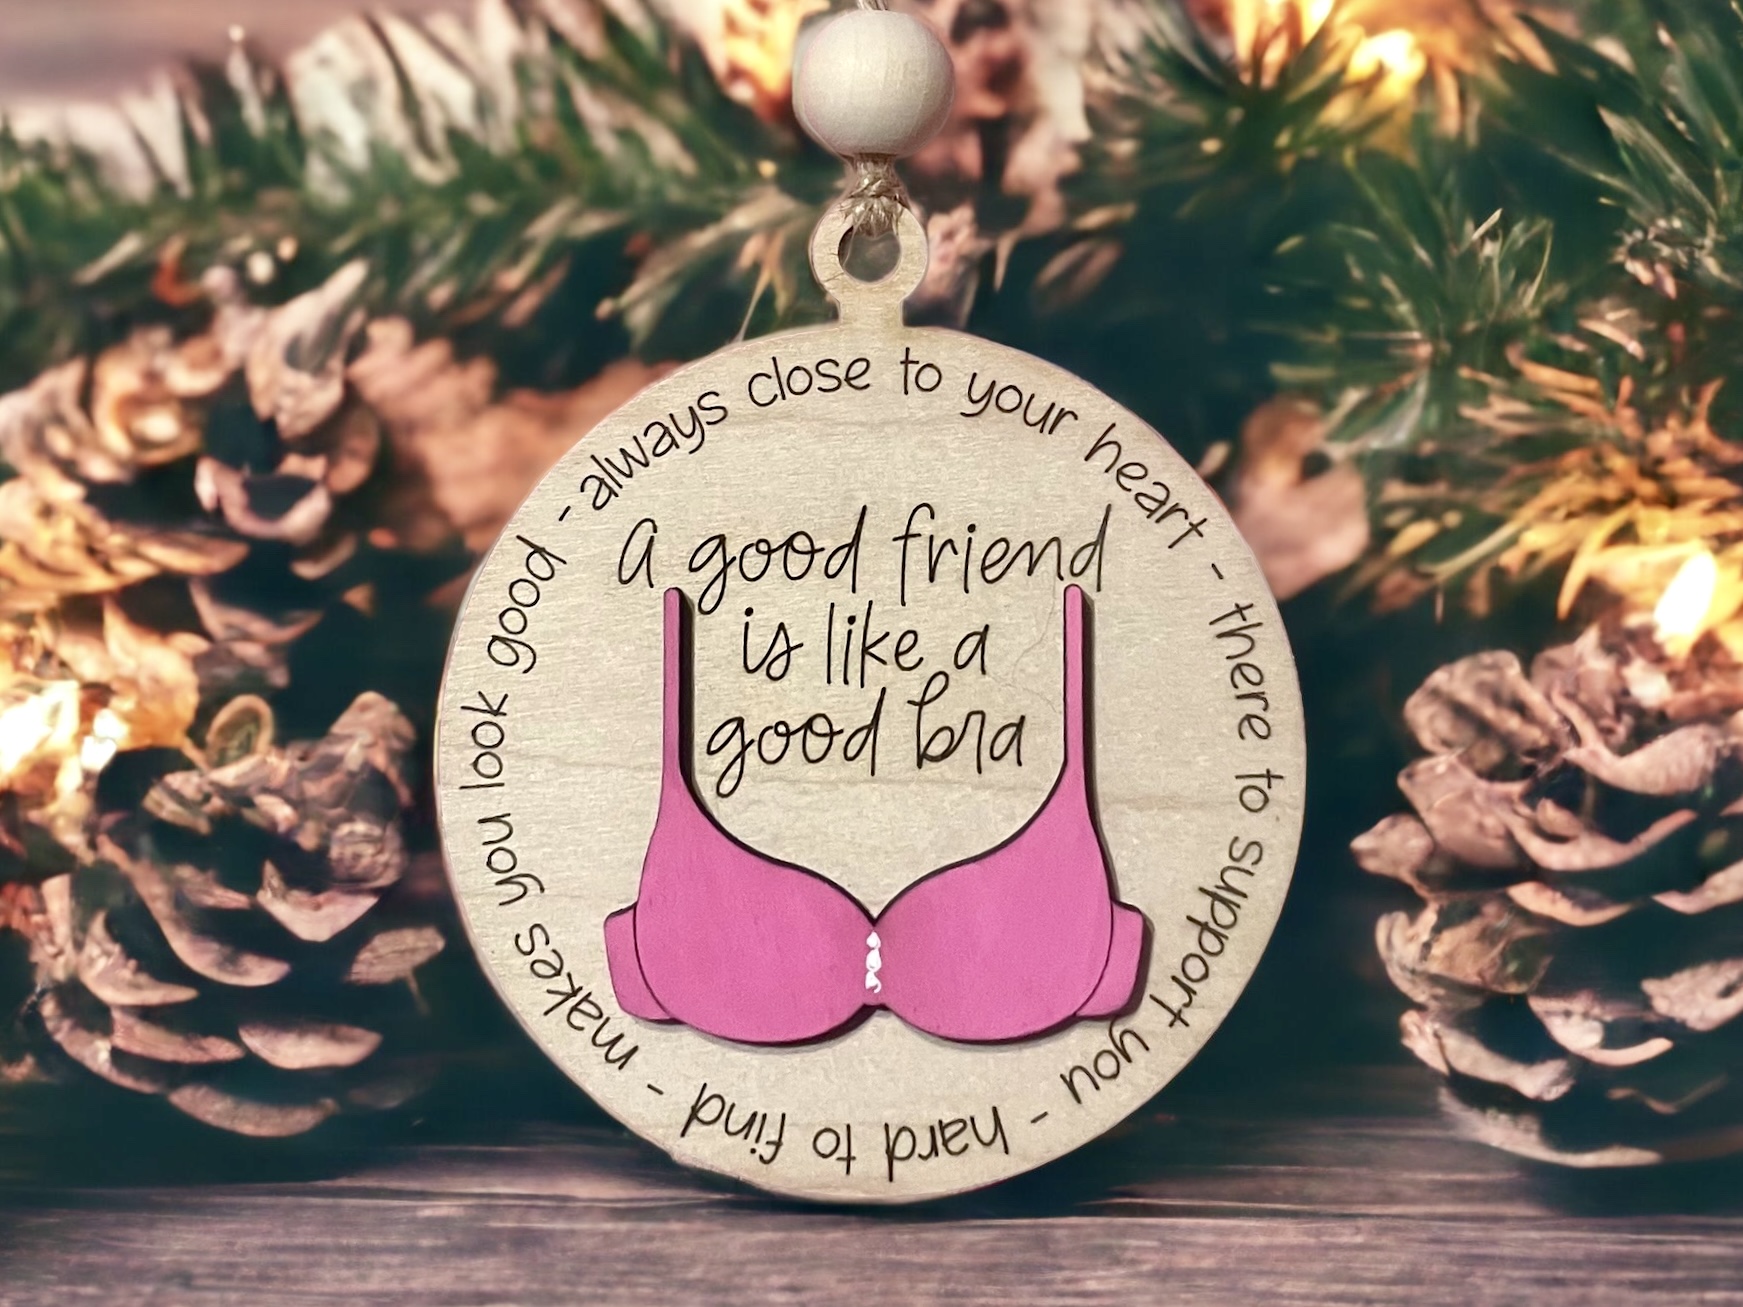 Holiday & Seasonal :: Christmas :: Best Friend Funny Bra Christmas Ornament